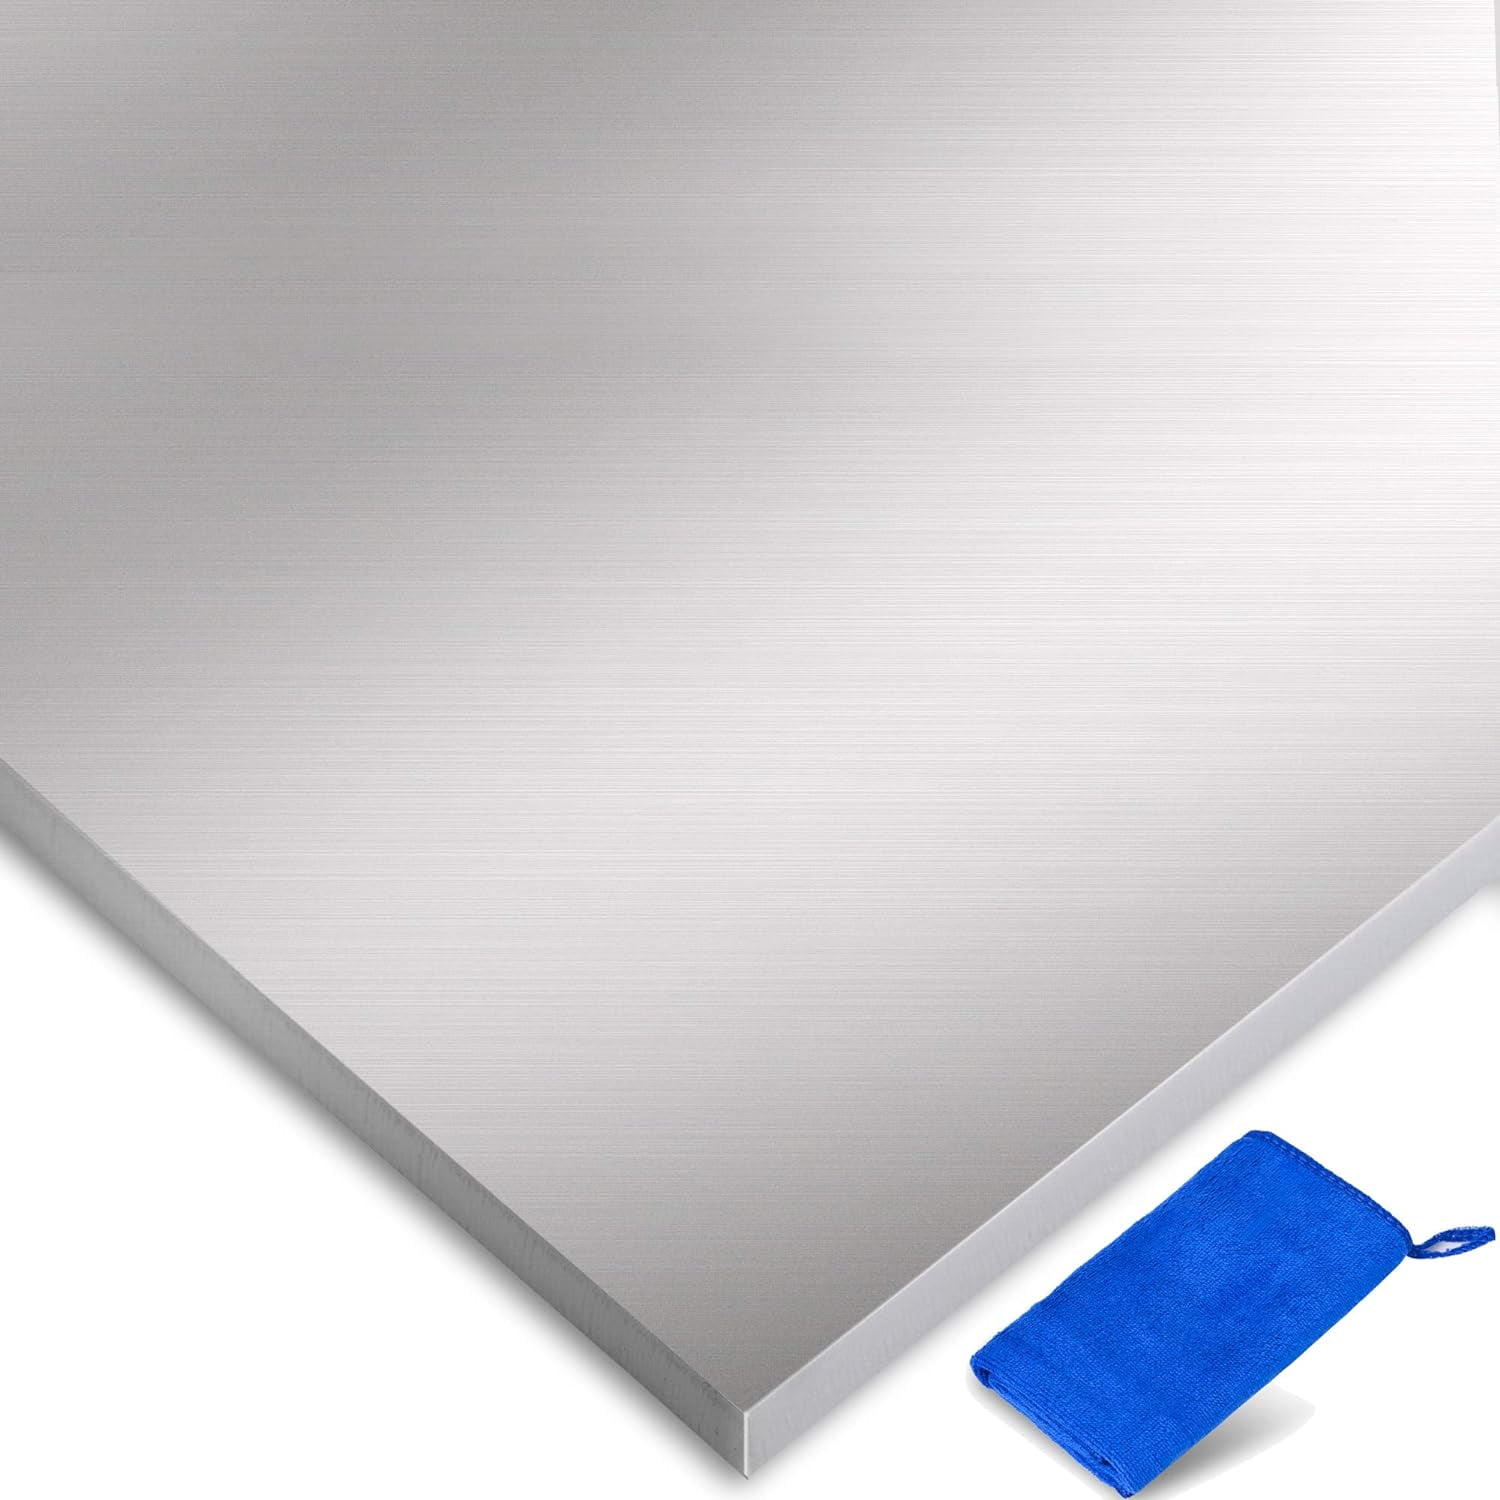 229574 - 125x78mm sheets thick aluminum foil, 100pk